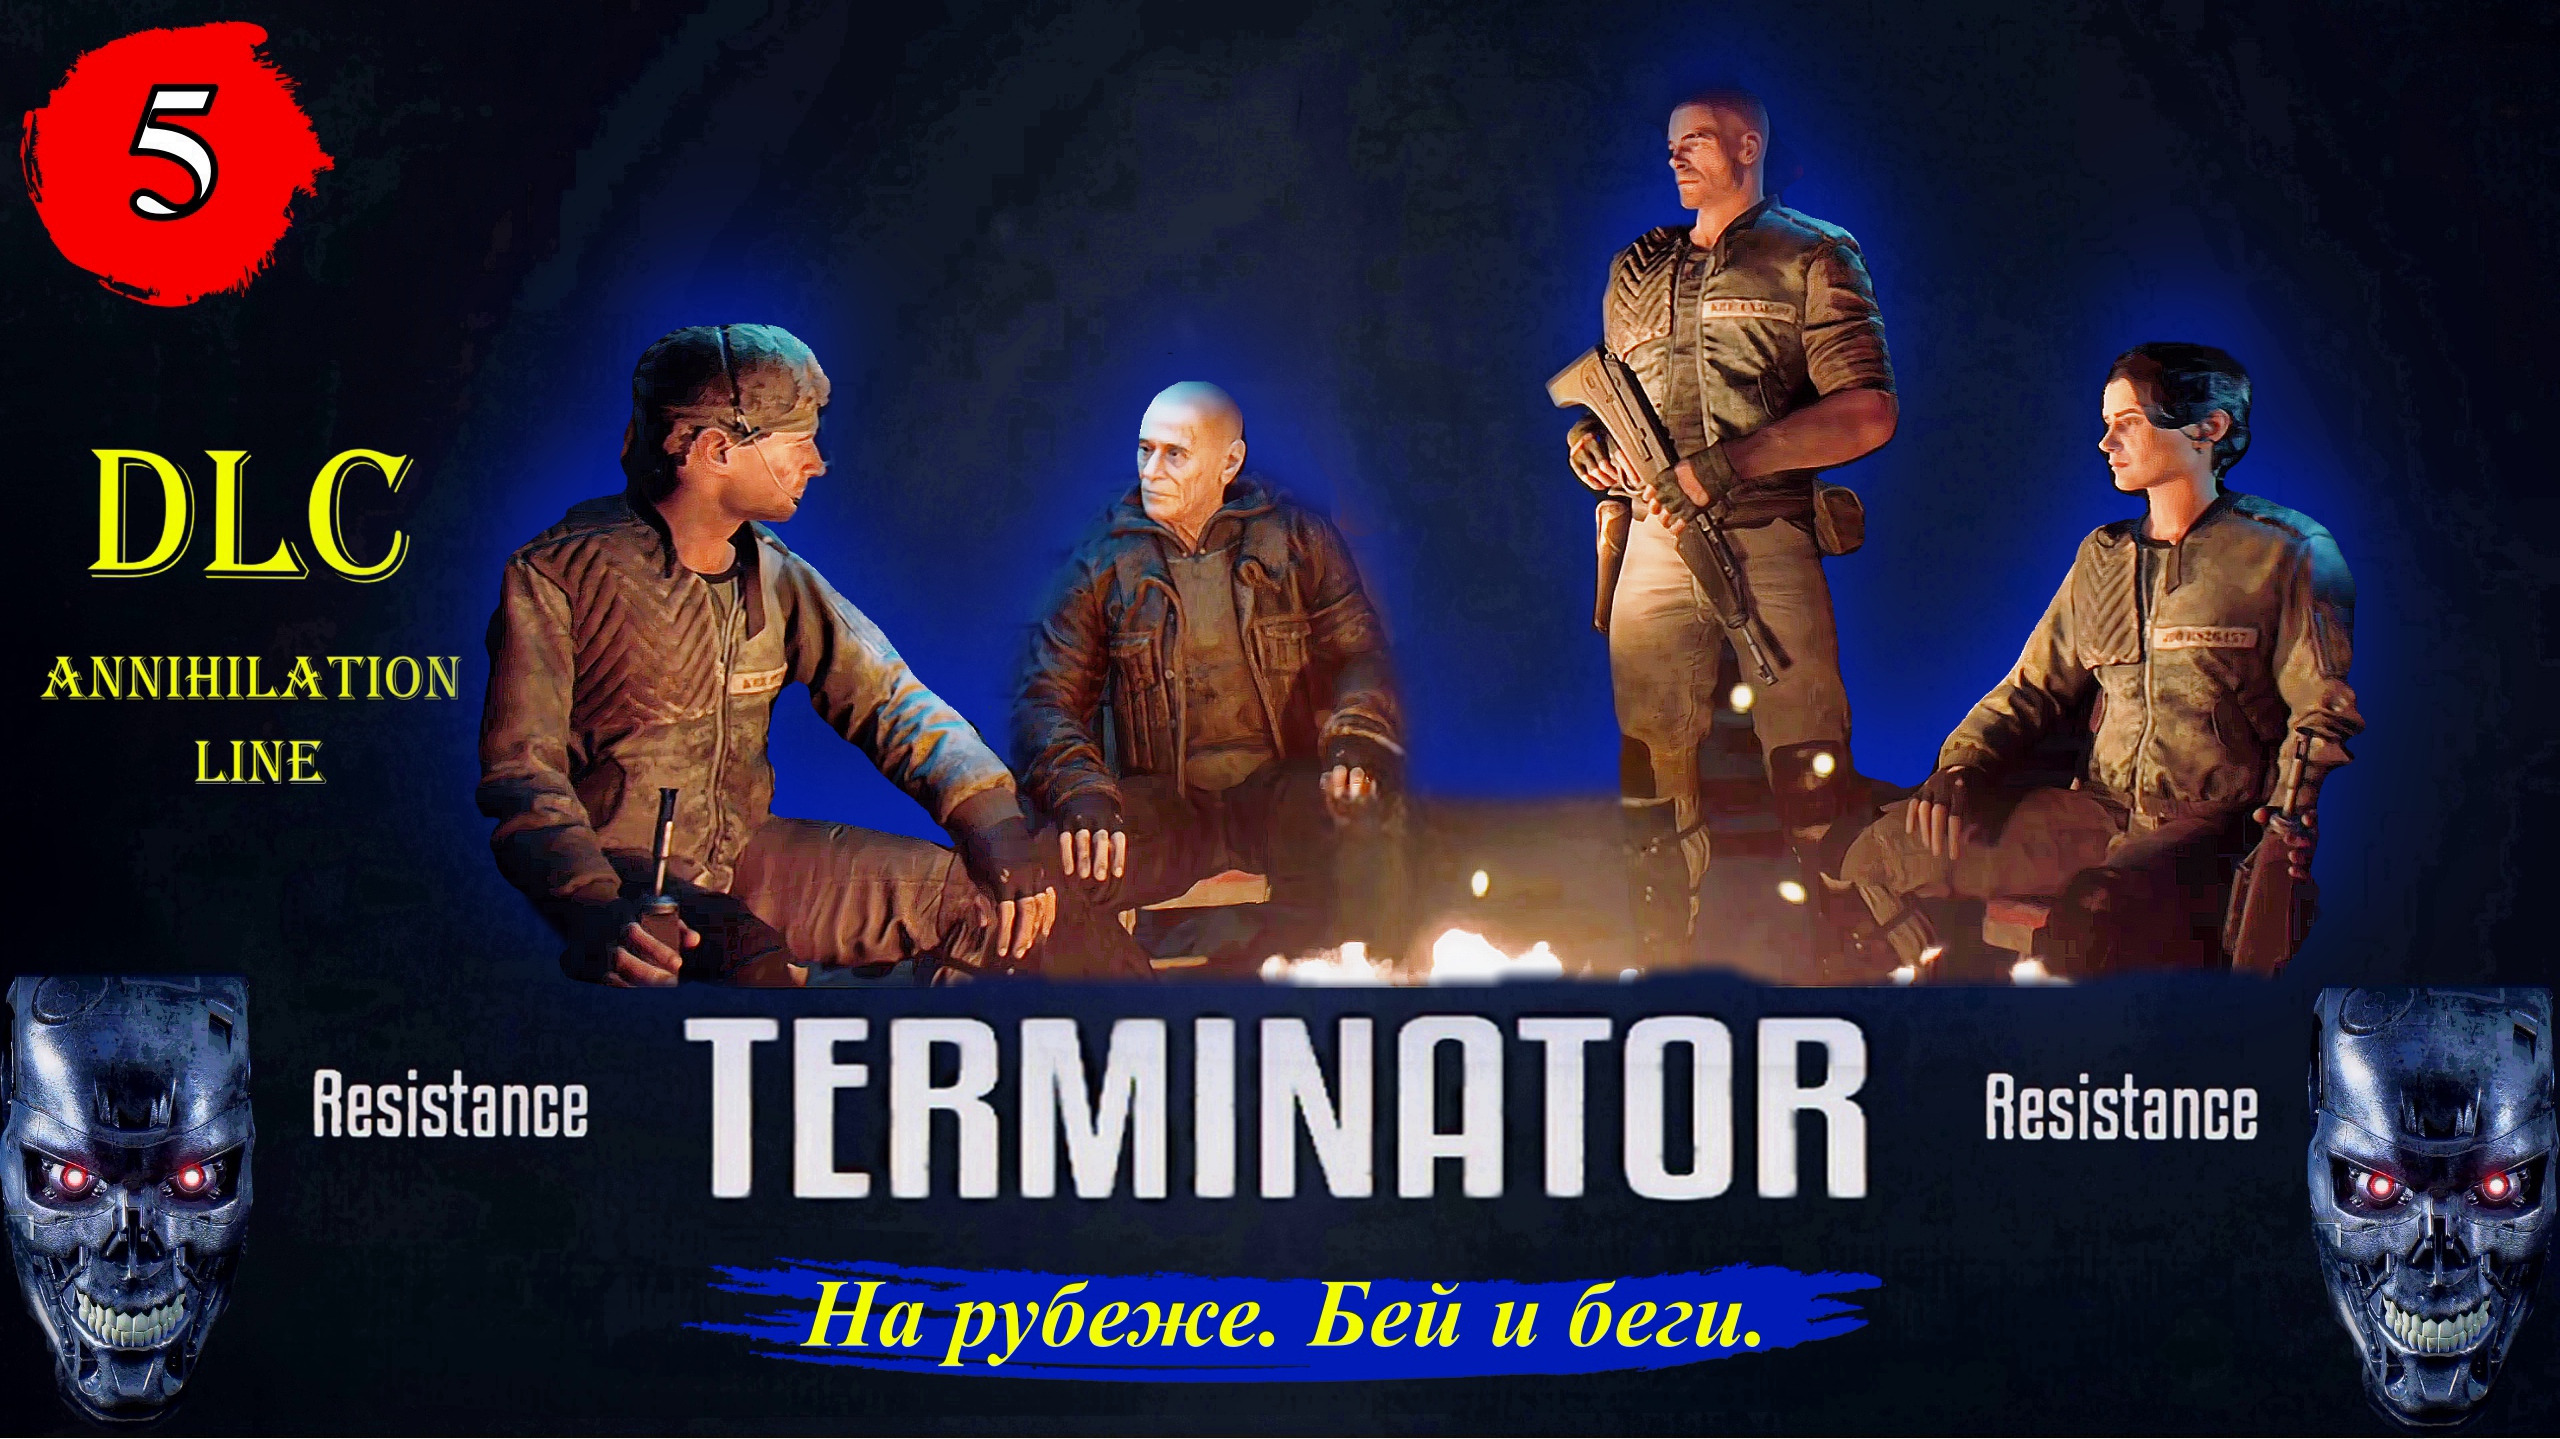 Terminator annihilation line. Terminator: Resistance Annihilation line DLC. Terminator Resistance Annihilation Терминатор t600. Terminator: Resistance Annihilation line DLC #1.